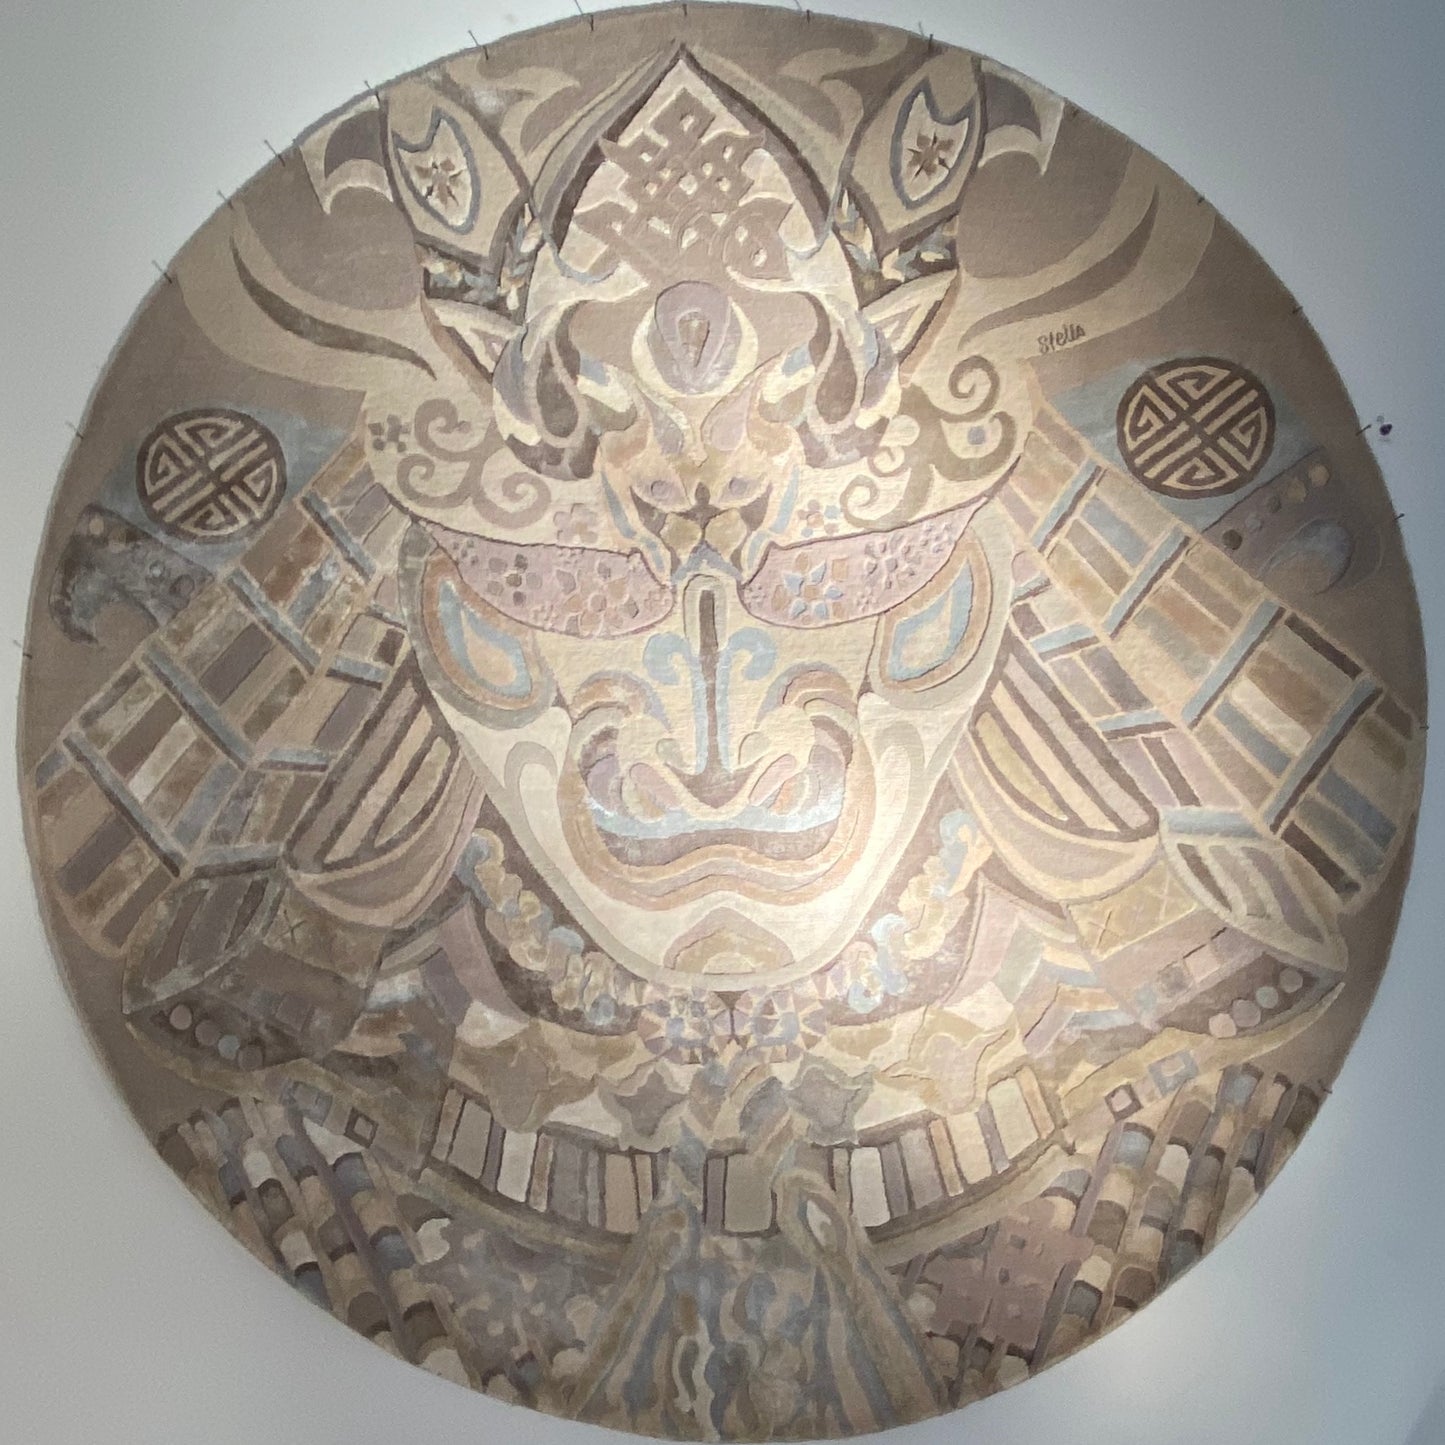 "LAST SAMURAI" Teppich Kunst Unikat 200cm rund - Beige Taupe Grau - Handgeknüpft Nepal